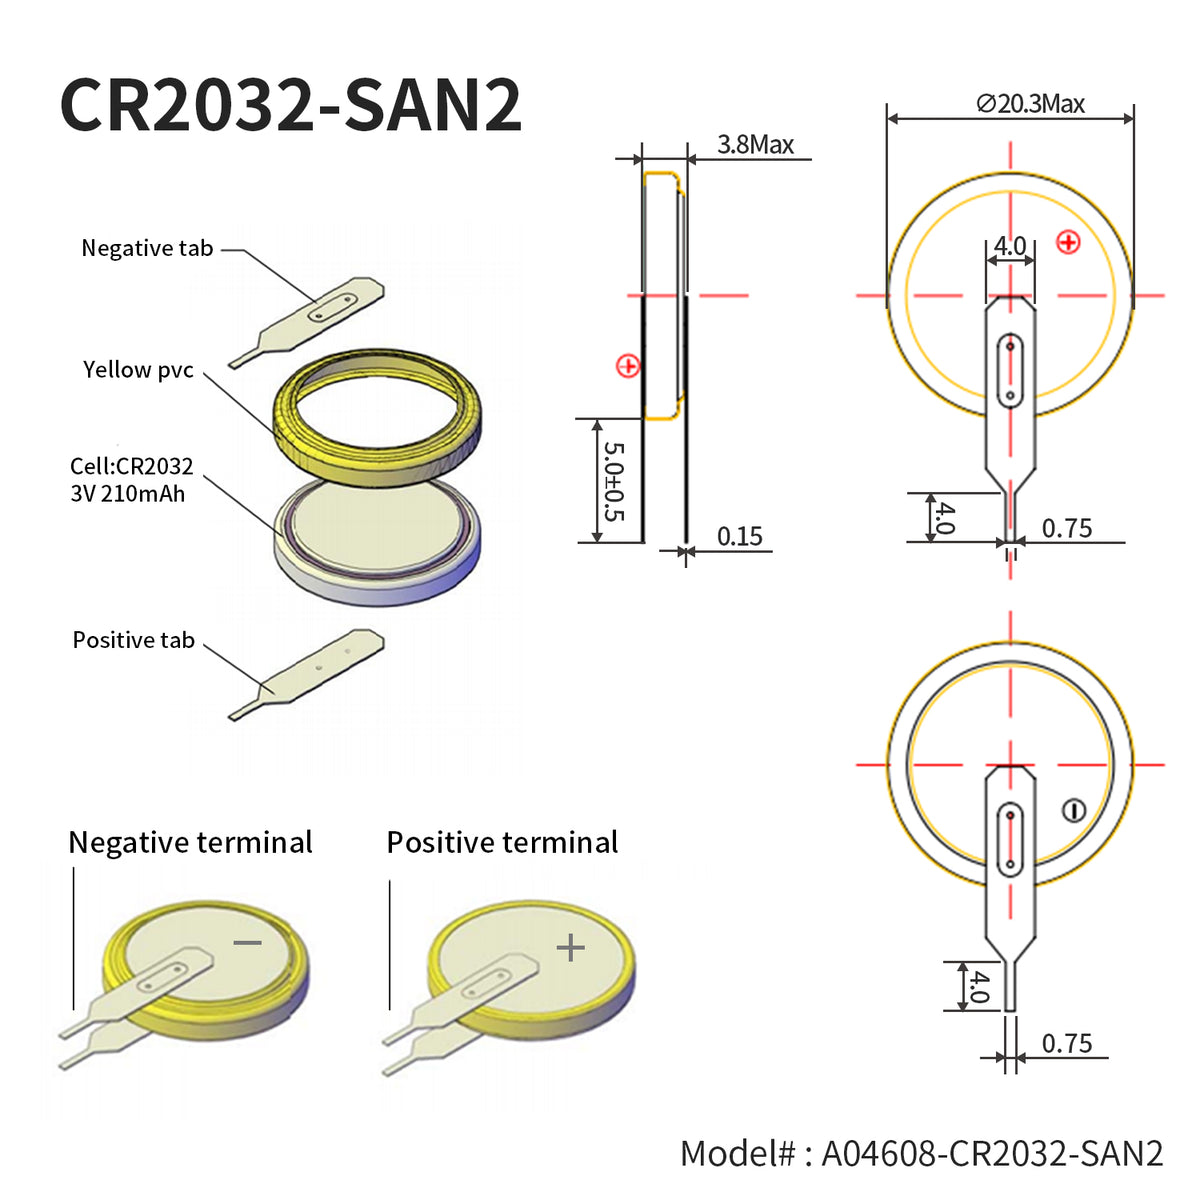 CR2032-SAN2